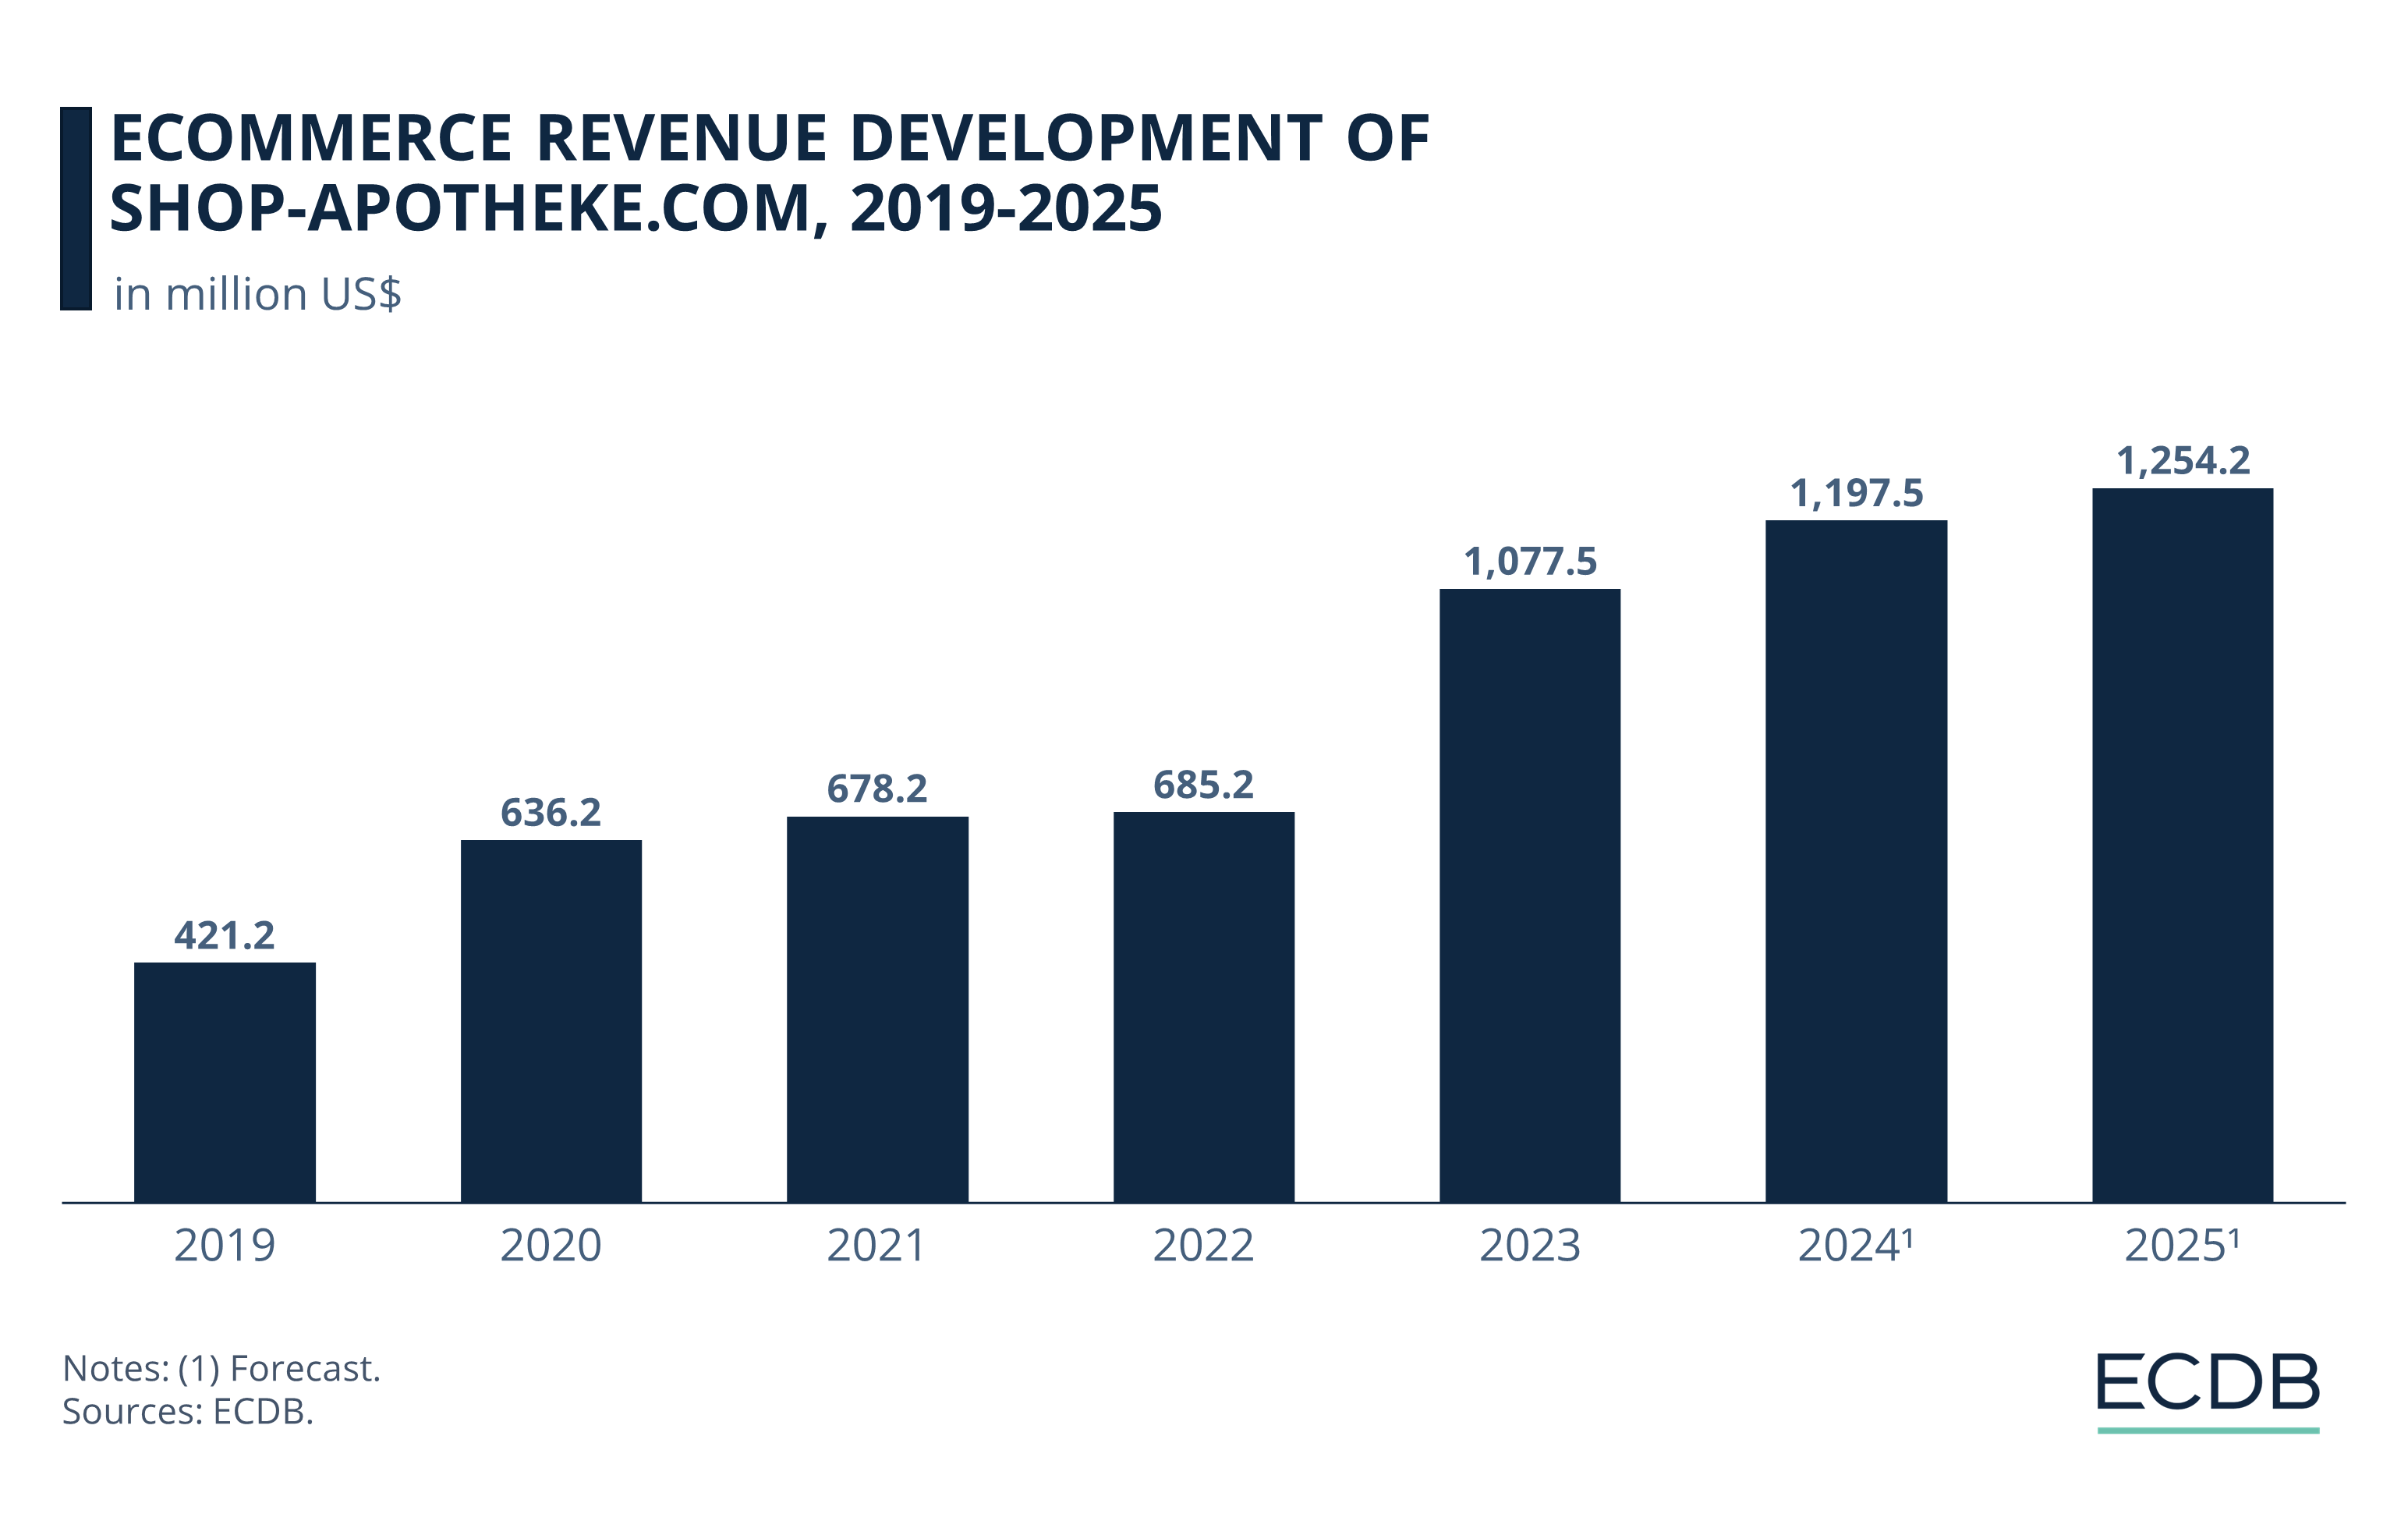 eCommerce Revenue Development of Shop-Apotheke.com, 2019-2025